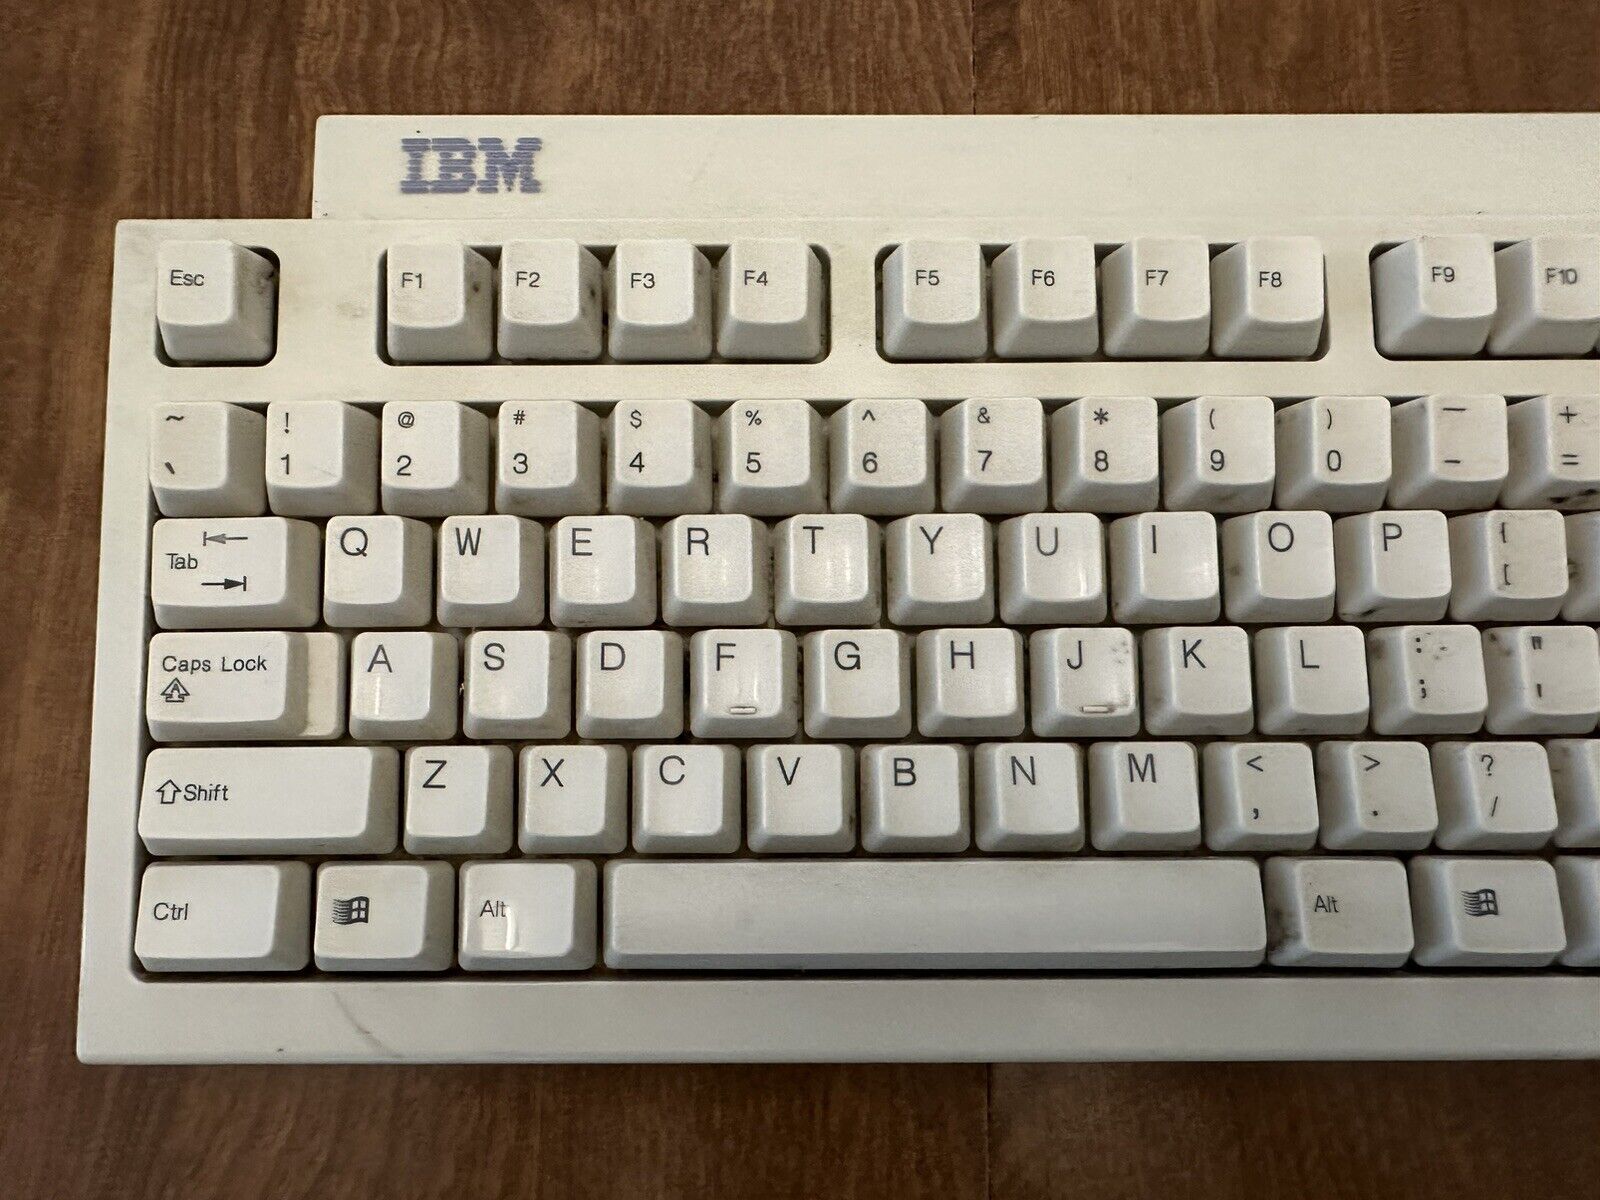 IBM KB-9910 Beige Wired Computer Keyboard Vintage Tested Working PS/2 Port